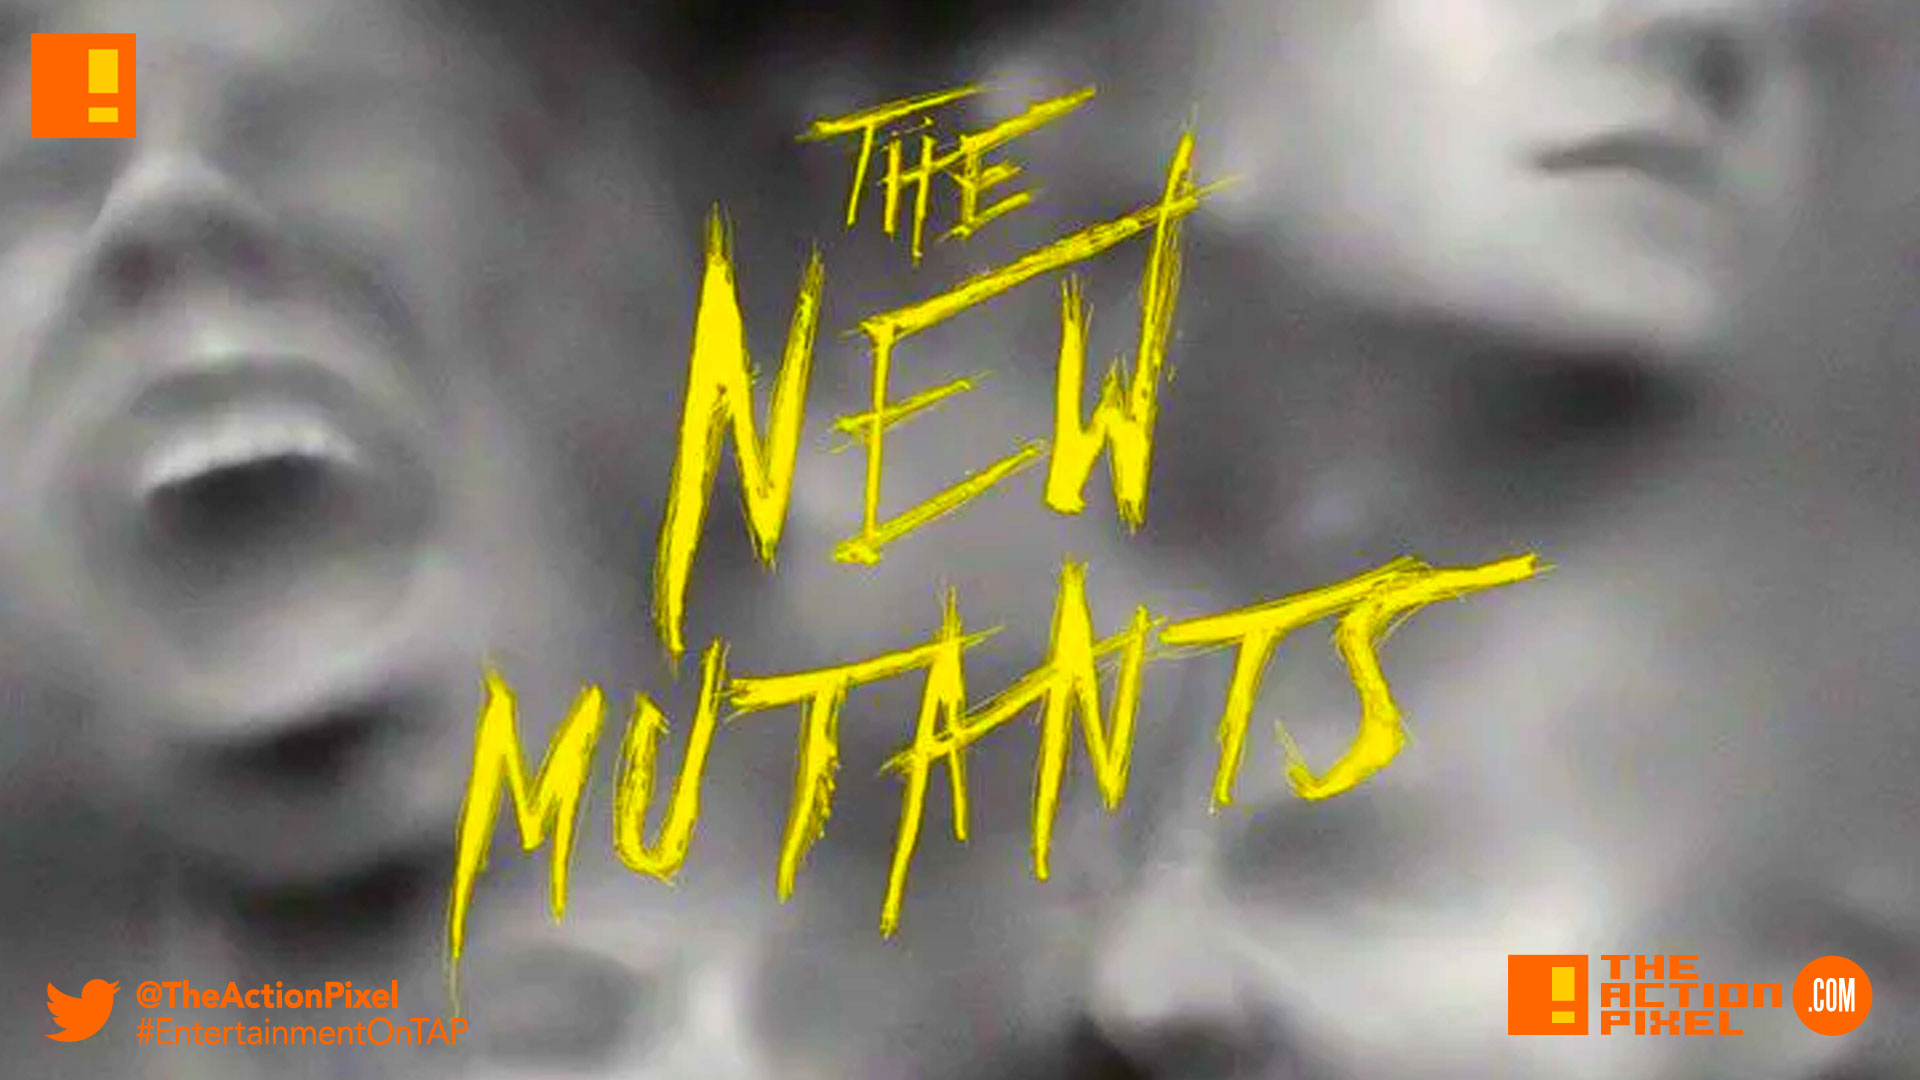 the new mutants, trailer, 20th century fox,magik, x-men, xmen, new mutants, x-men: new mutants, fox, marvel, entertainment on tap, Anya Taylor-Joy, maisie williams,wolfsbane, marvel comics, entertainment on tap, the action pixel,poster, promo